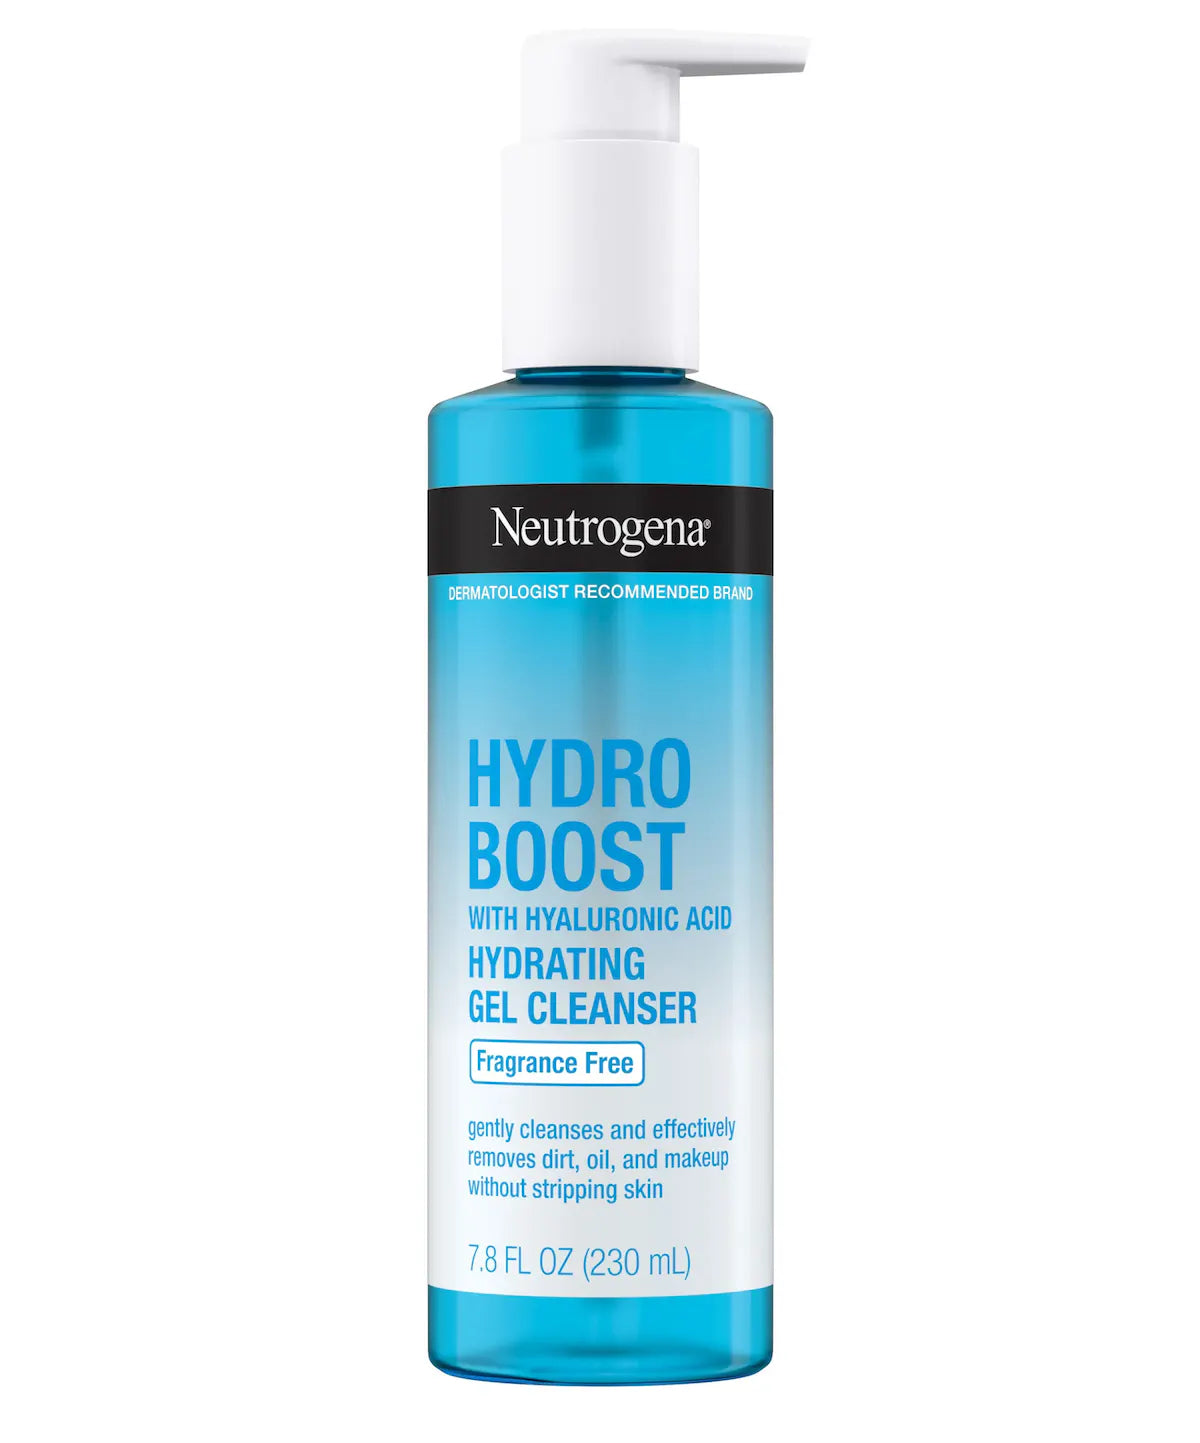 NEUTROGENA hydro boost with hyaluronic acid hydrating gel cleanser fragrance free